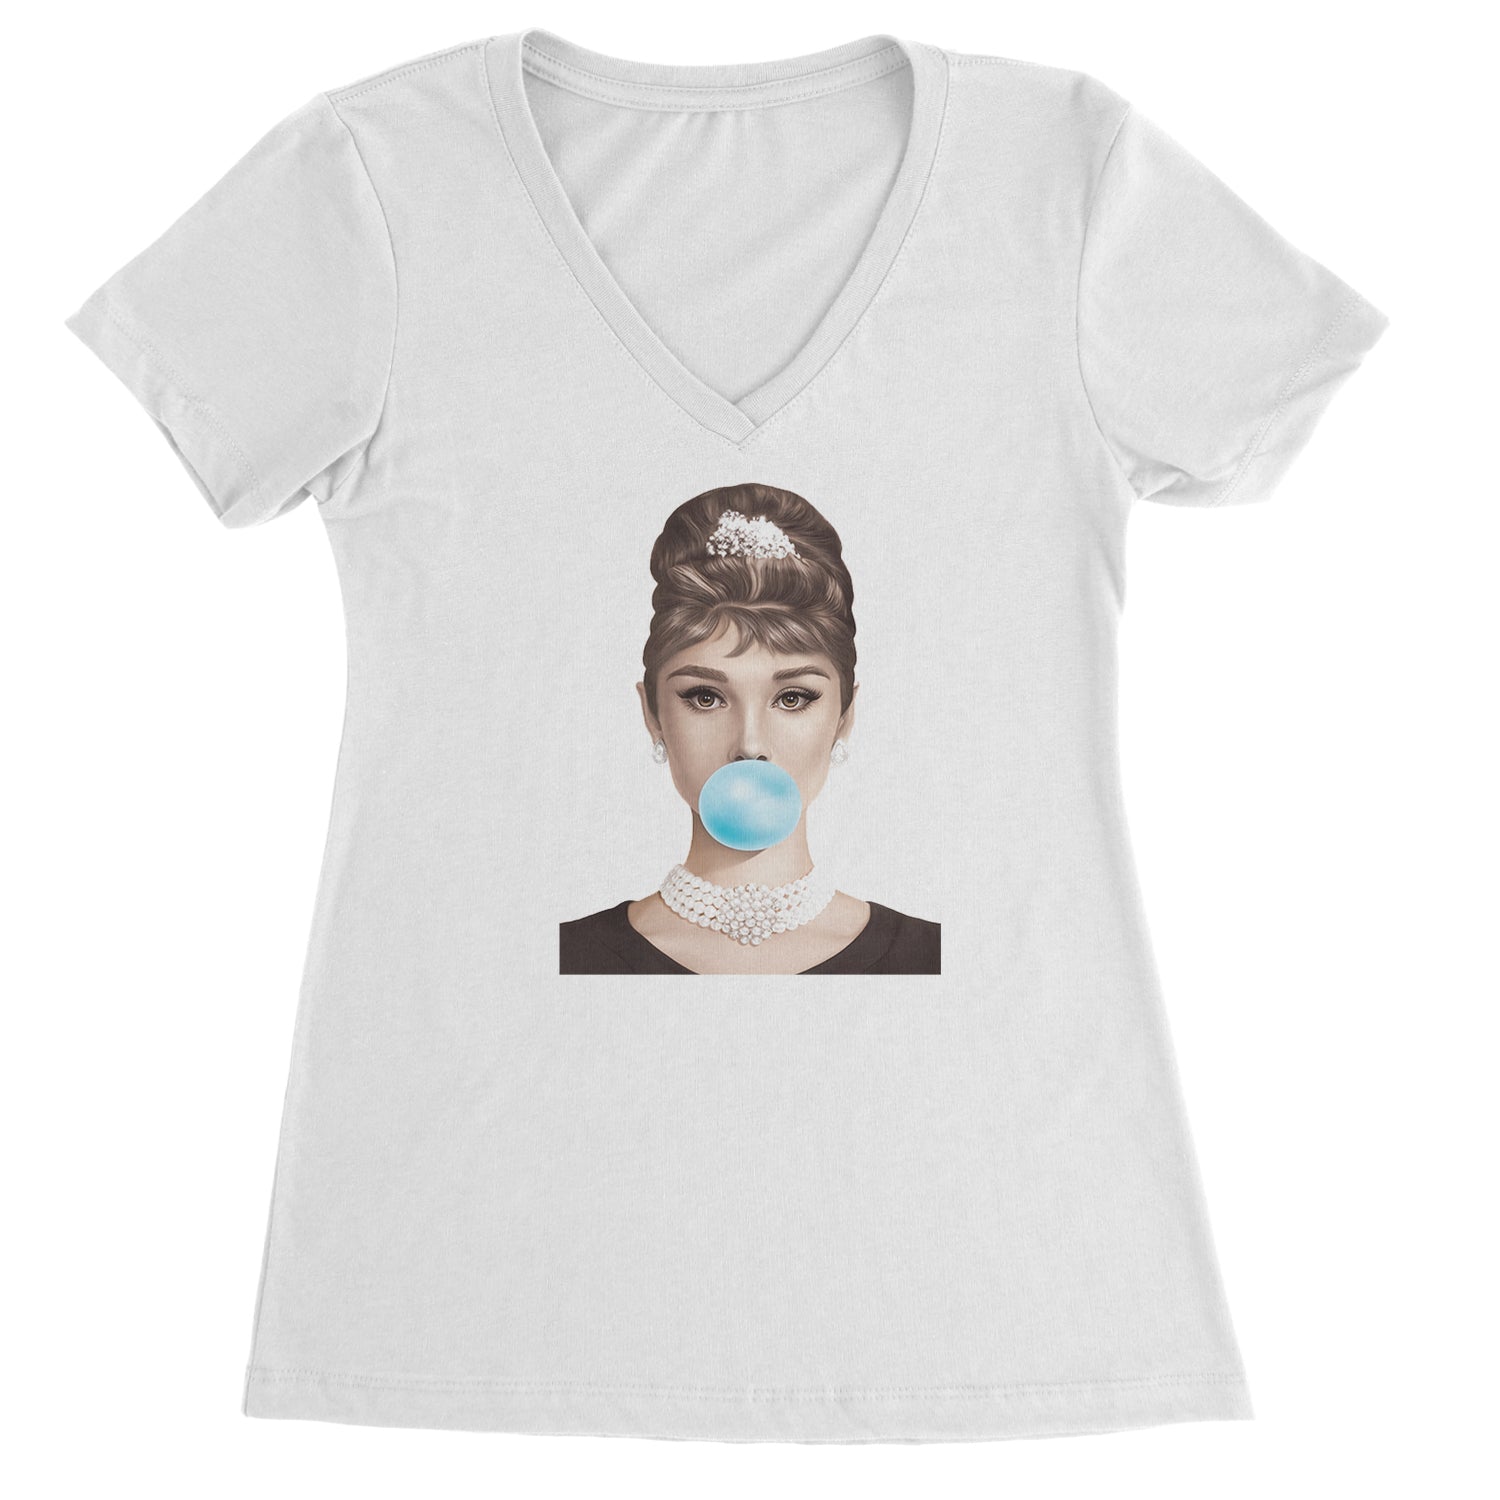 Audrey Hepburn Chewing Bubble Gum American Icon Ladies V-Neck T-shirt Black